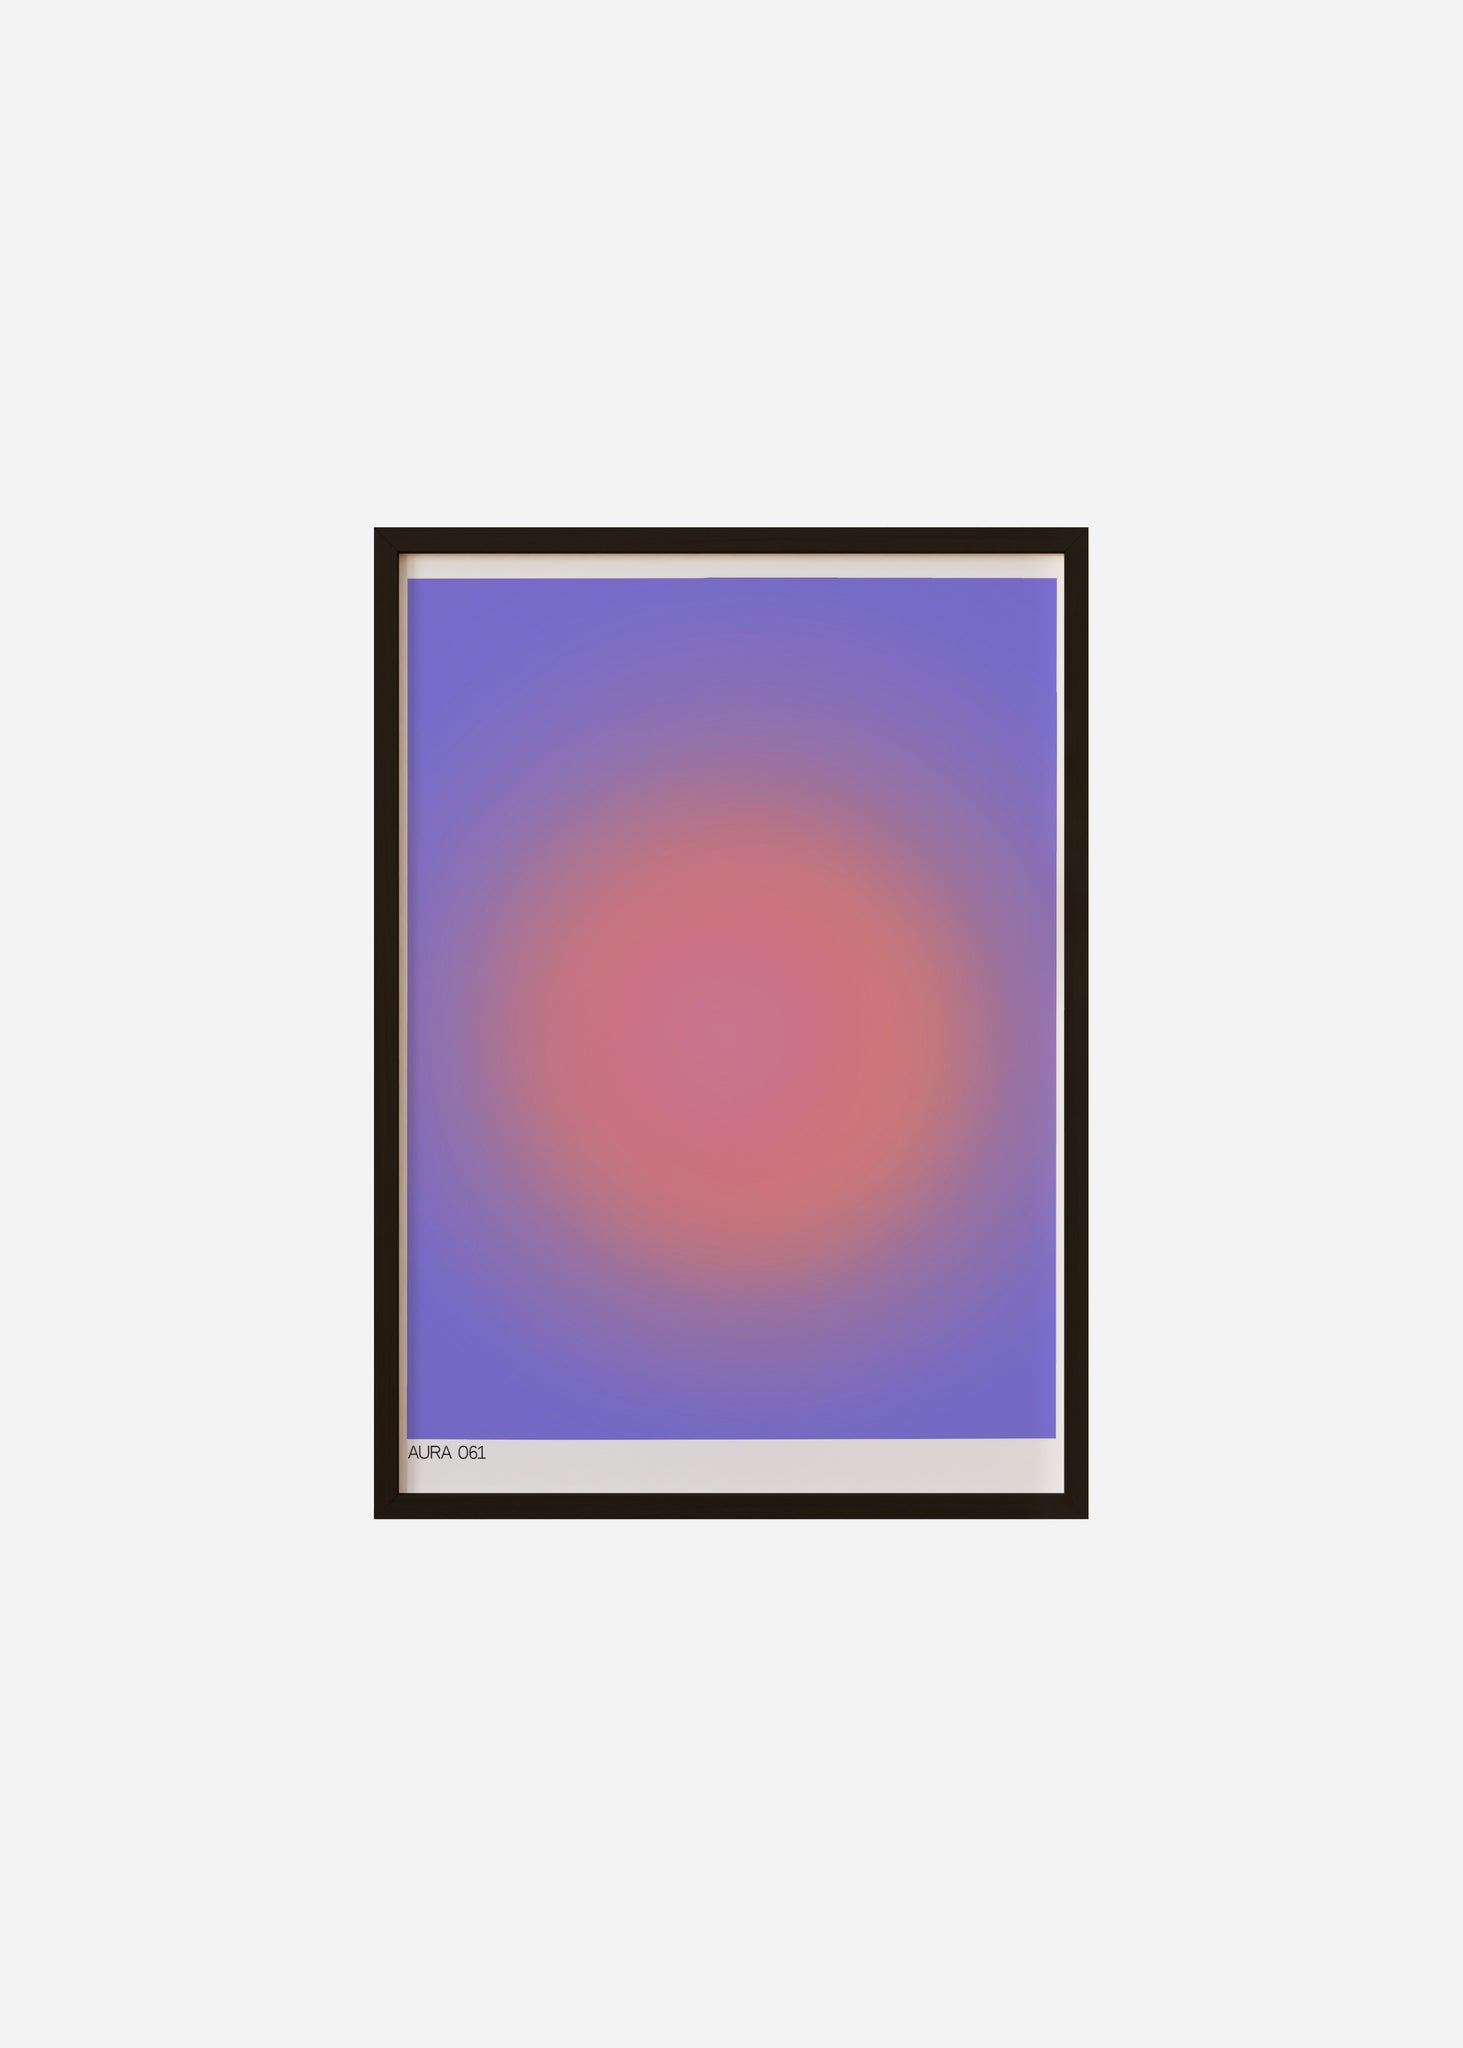 aura 061 Framed Print